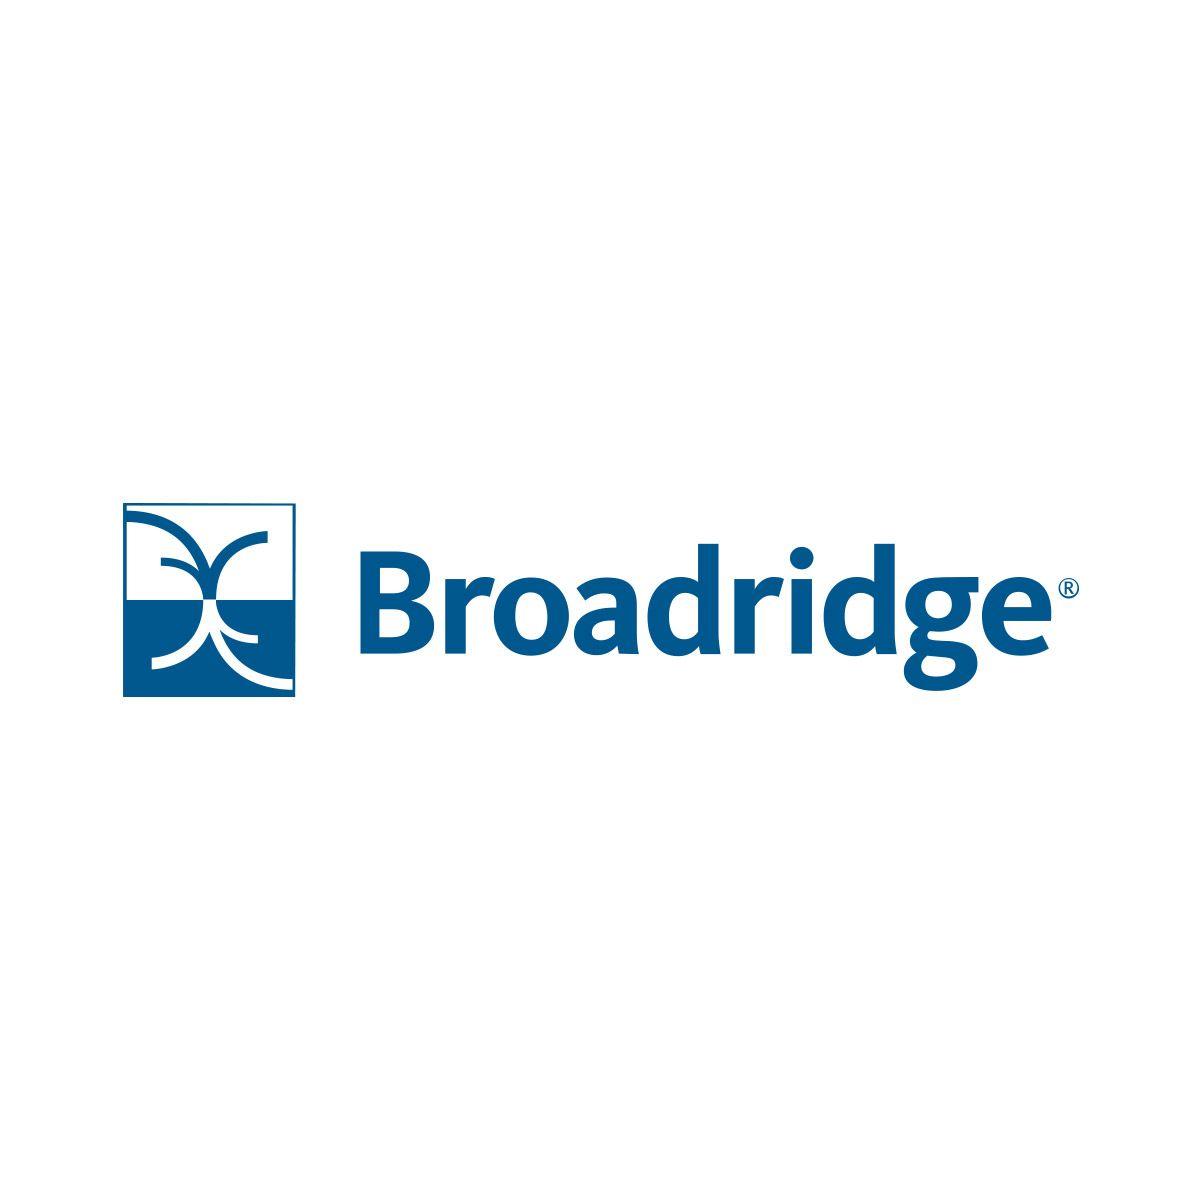 M Financial Logo - Broadridge - Technology & Operations, Communications, Data Analytics